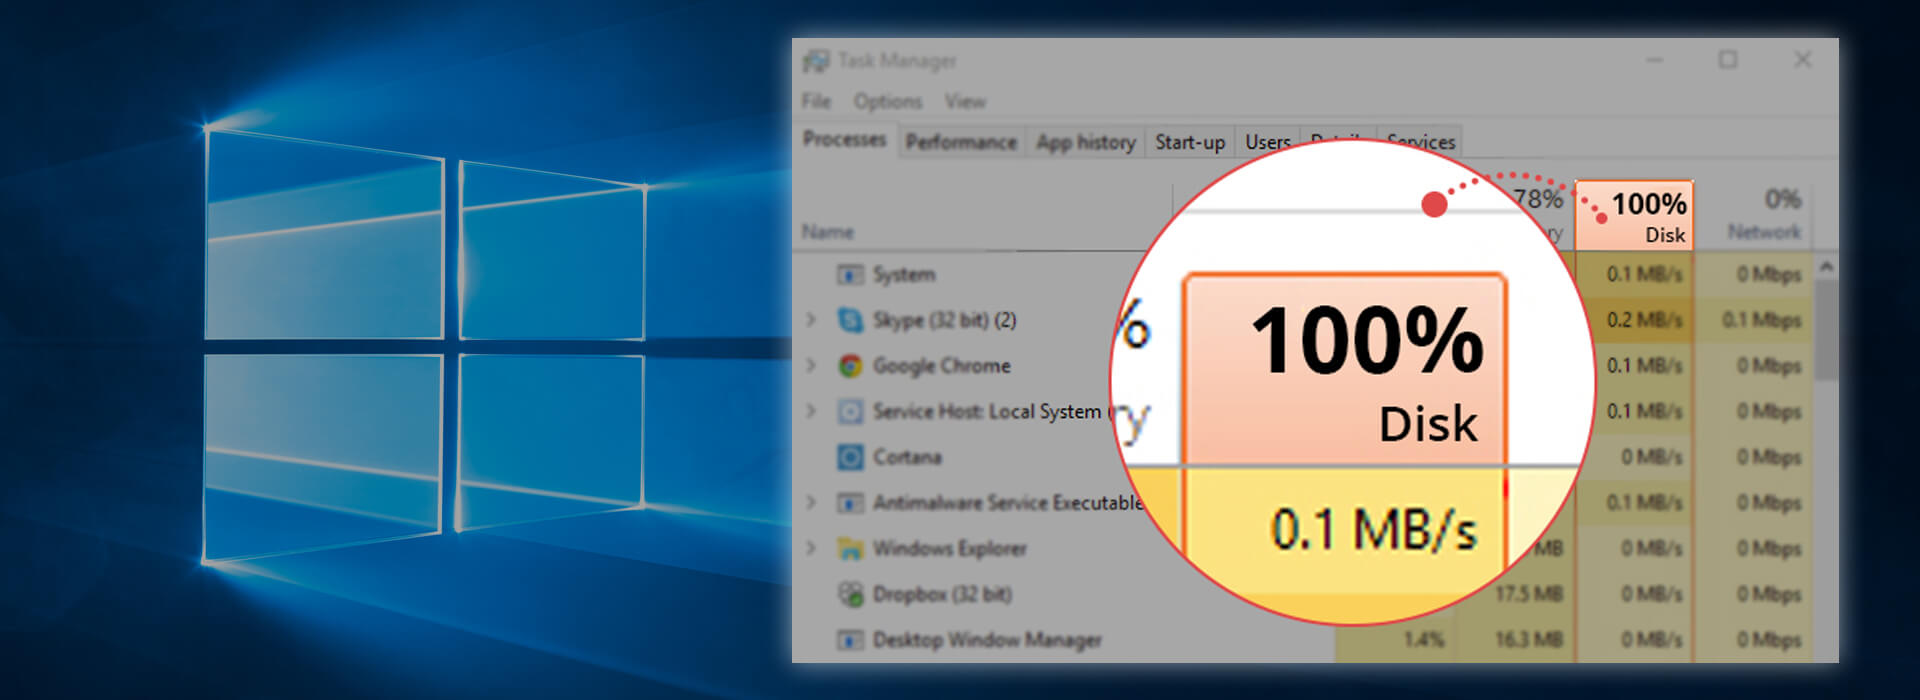 Windows 10 64 bit 100 disk usage